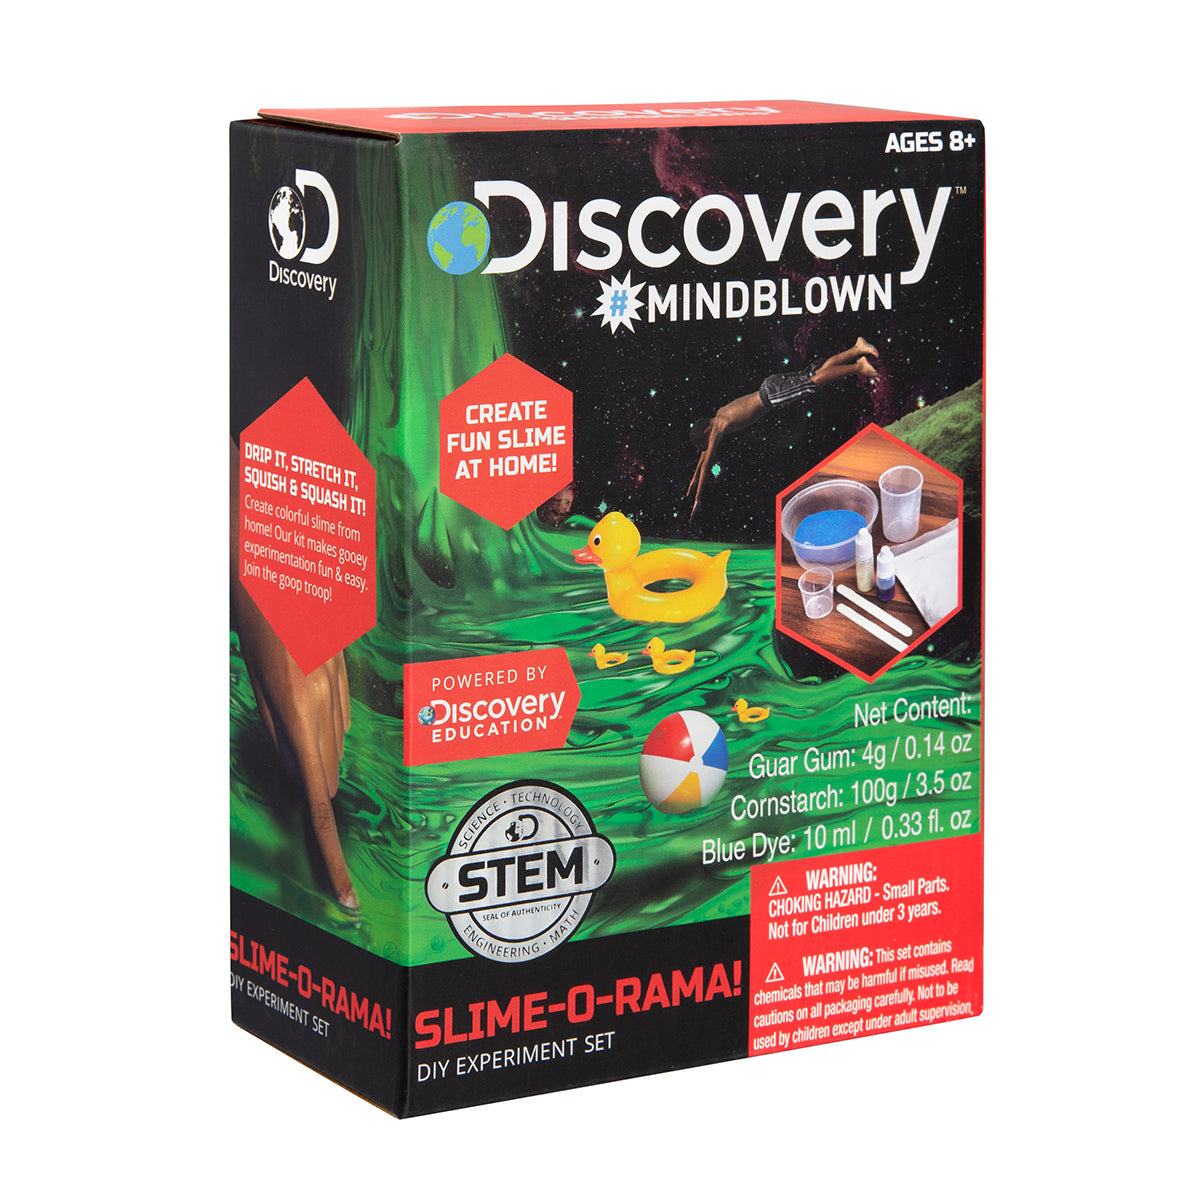 Discovery Mindblown Mini Slime-O-Rama Experiment Set